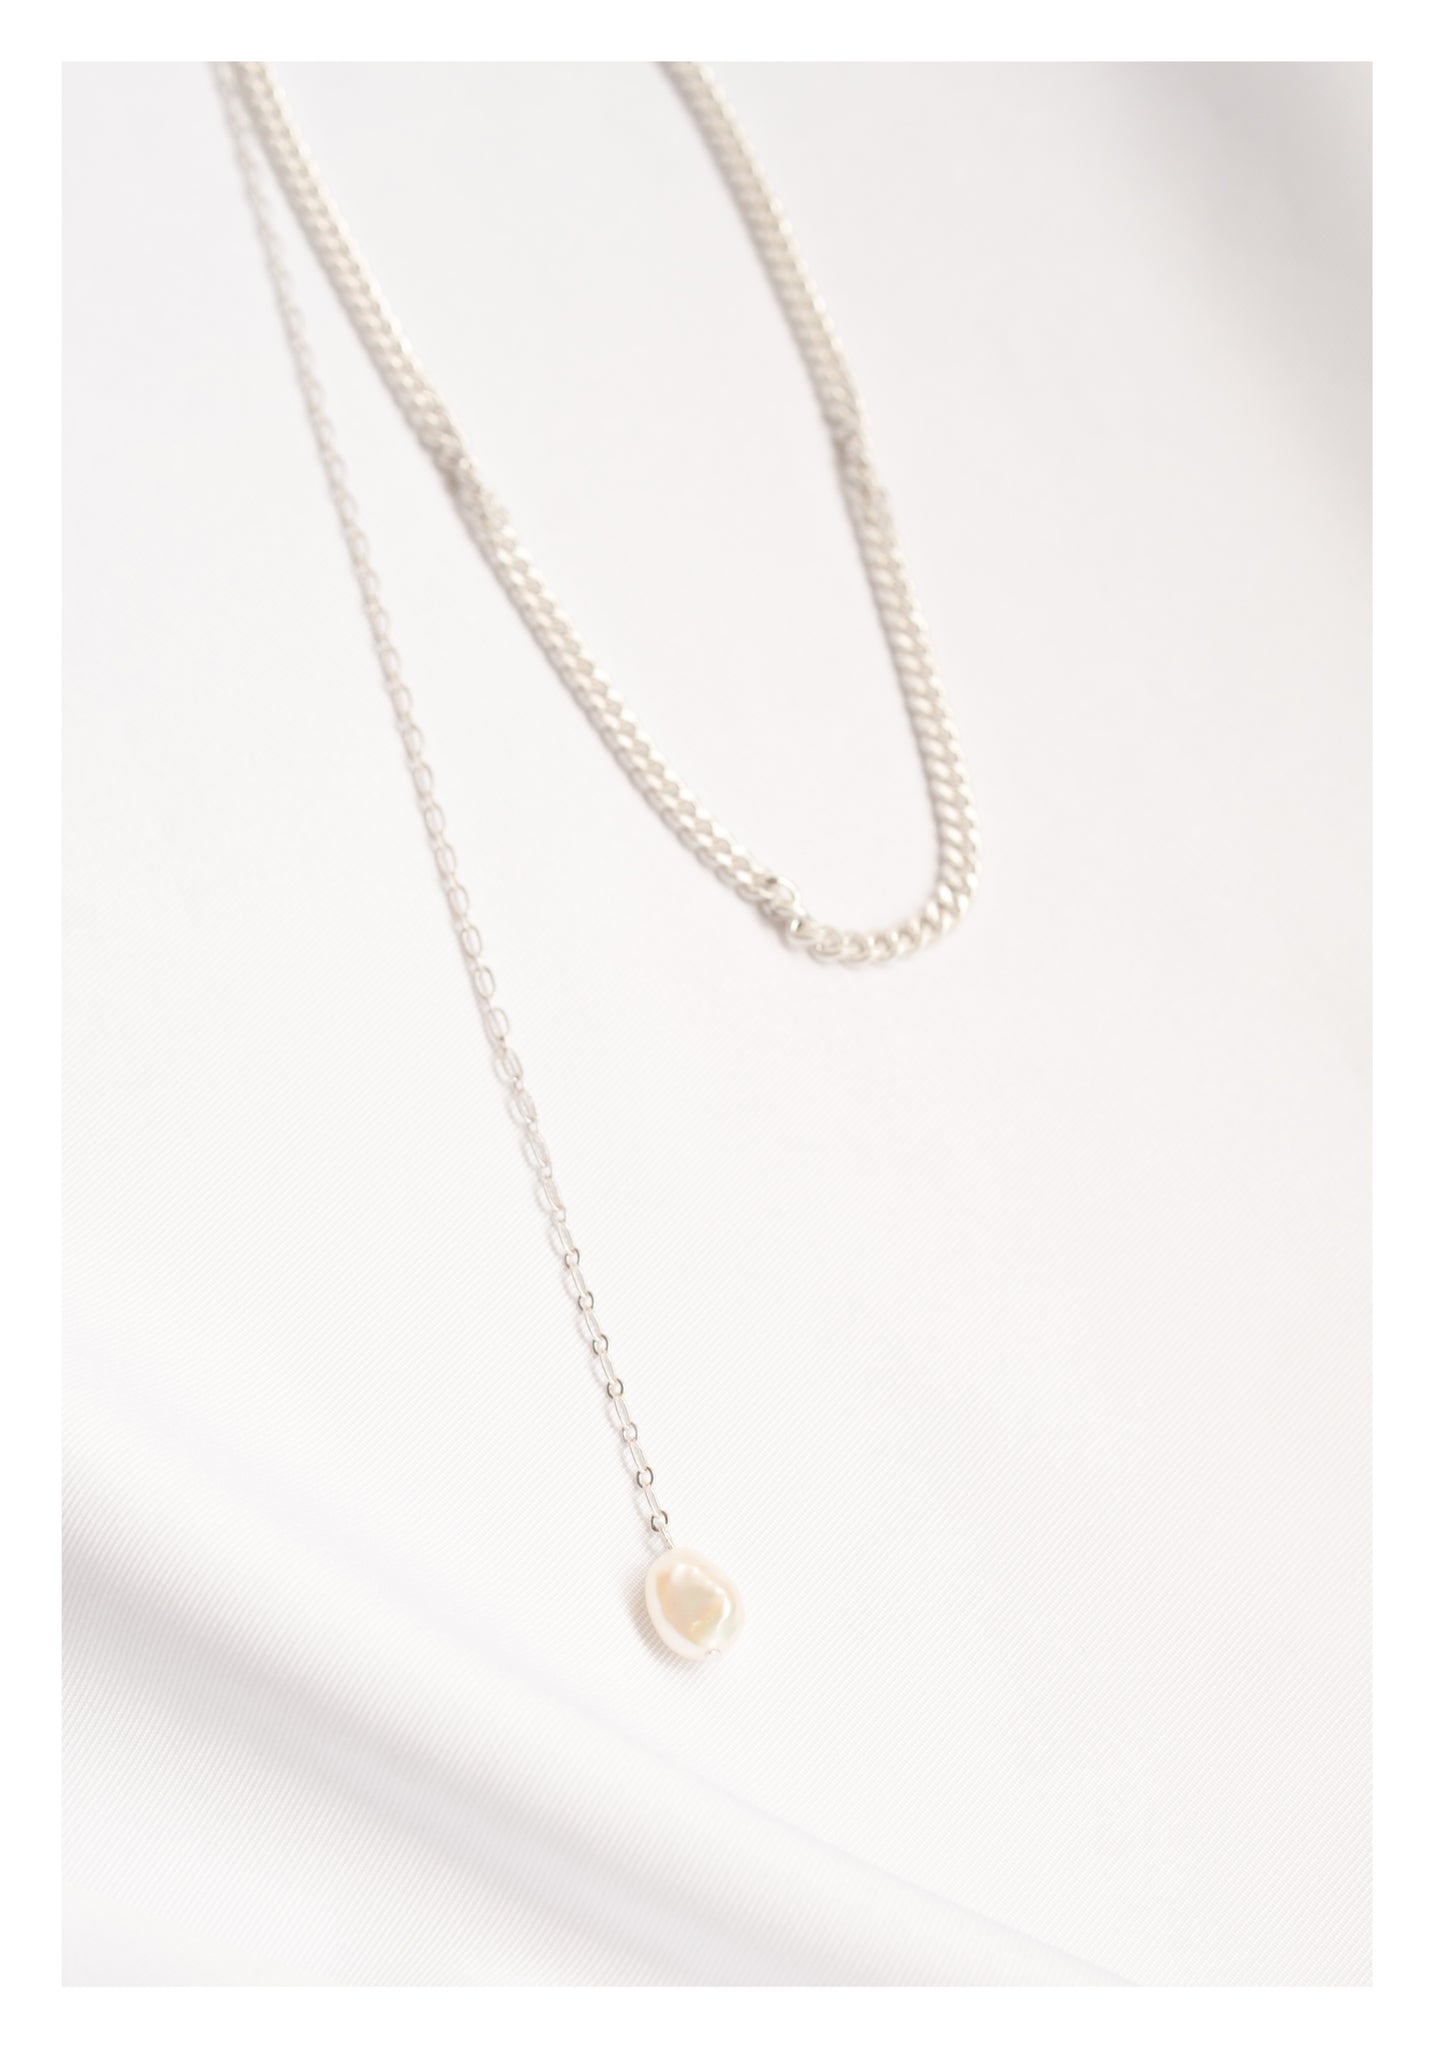 Matt Single Long Dripping Pearl Necklace Silver - whoami